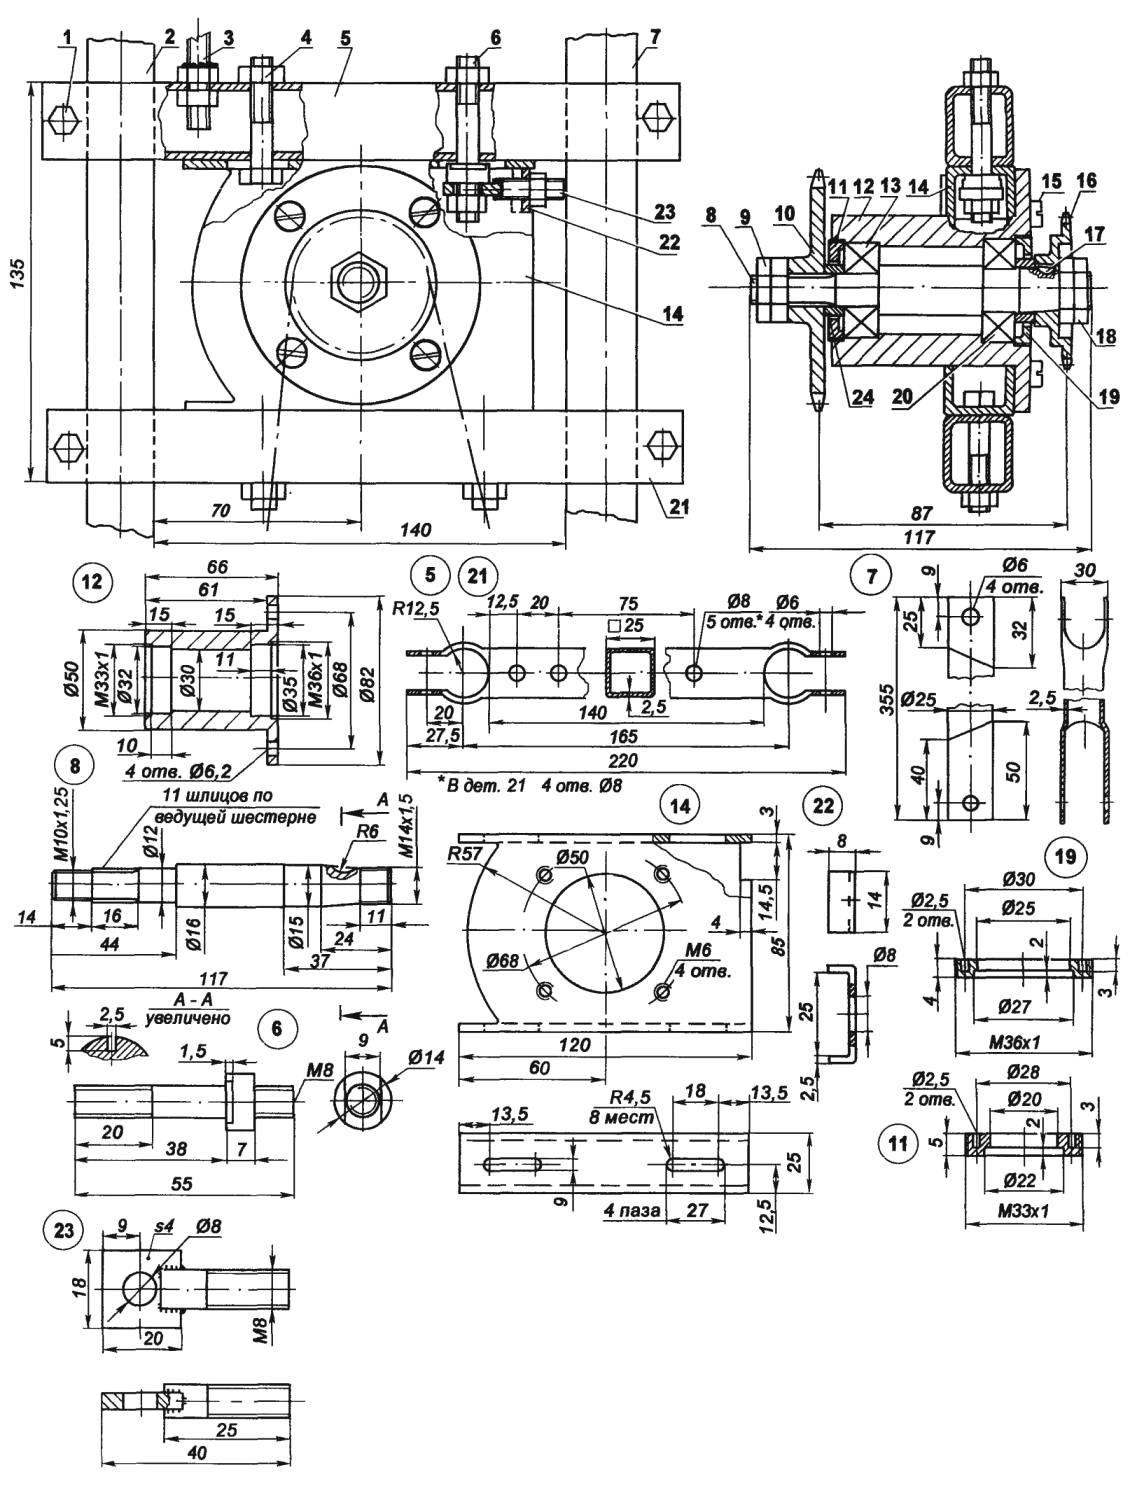 Fig. 3. Intermediate gearbox